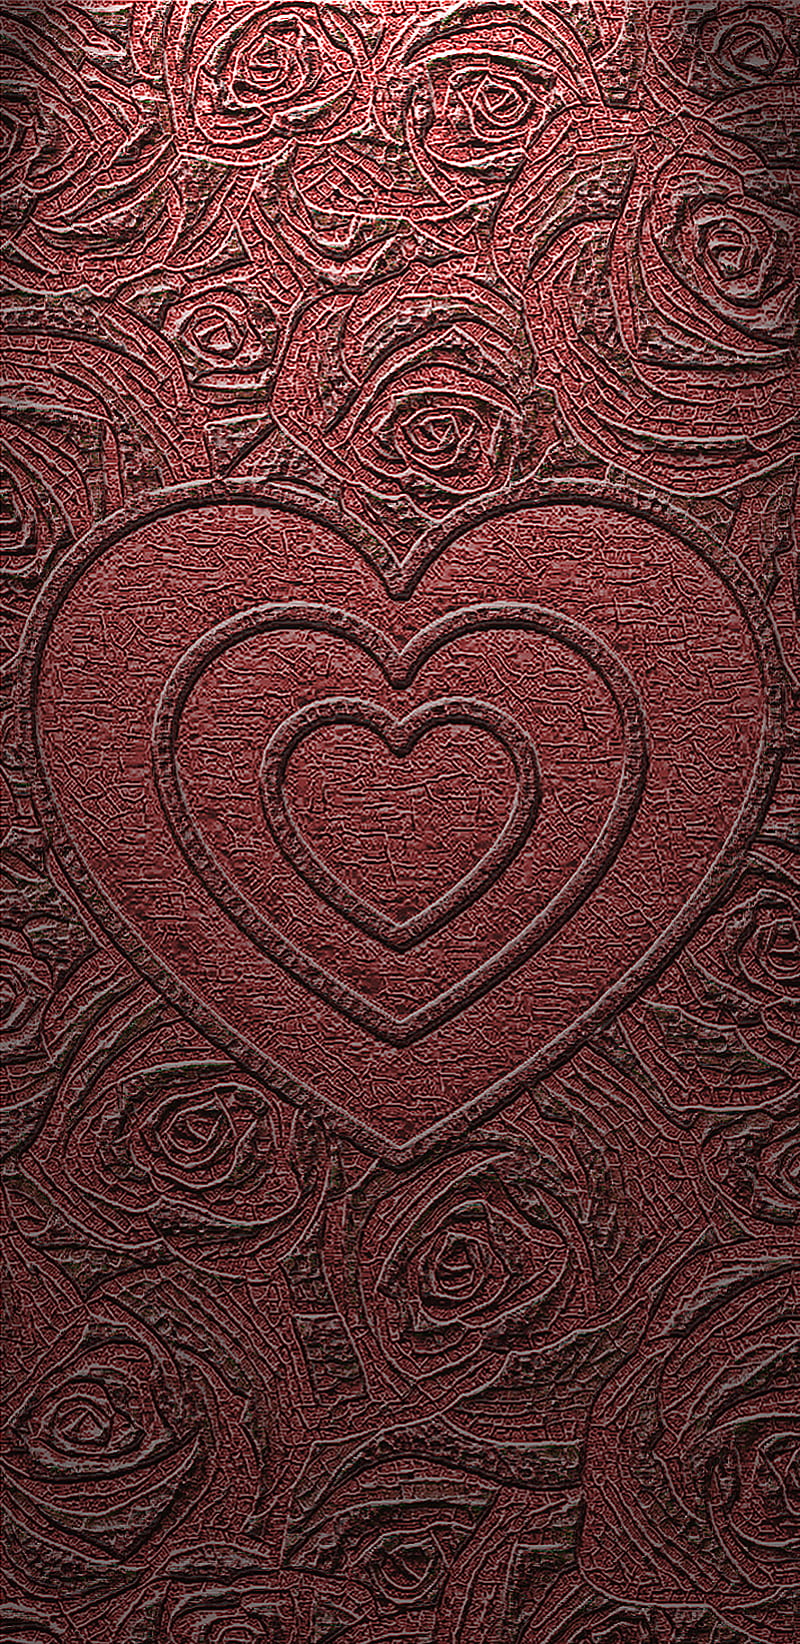 Rose Heart Wall Sculpt Romance Romantic Flower Valentine Love Passion Hd Phone Wallpaper